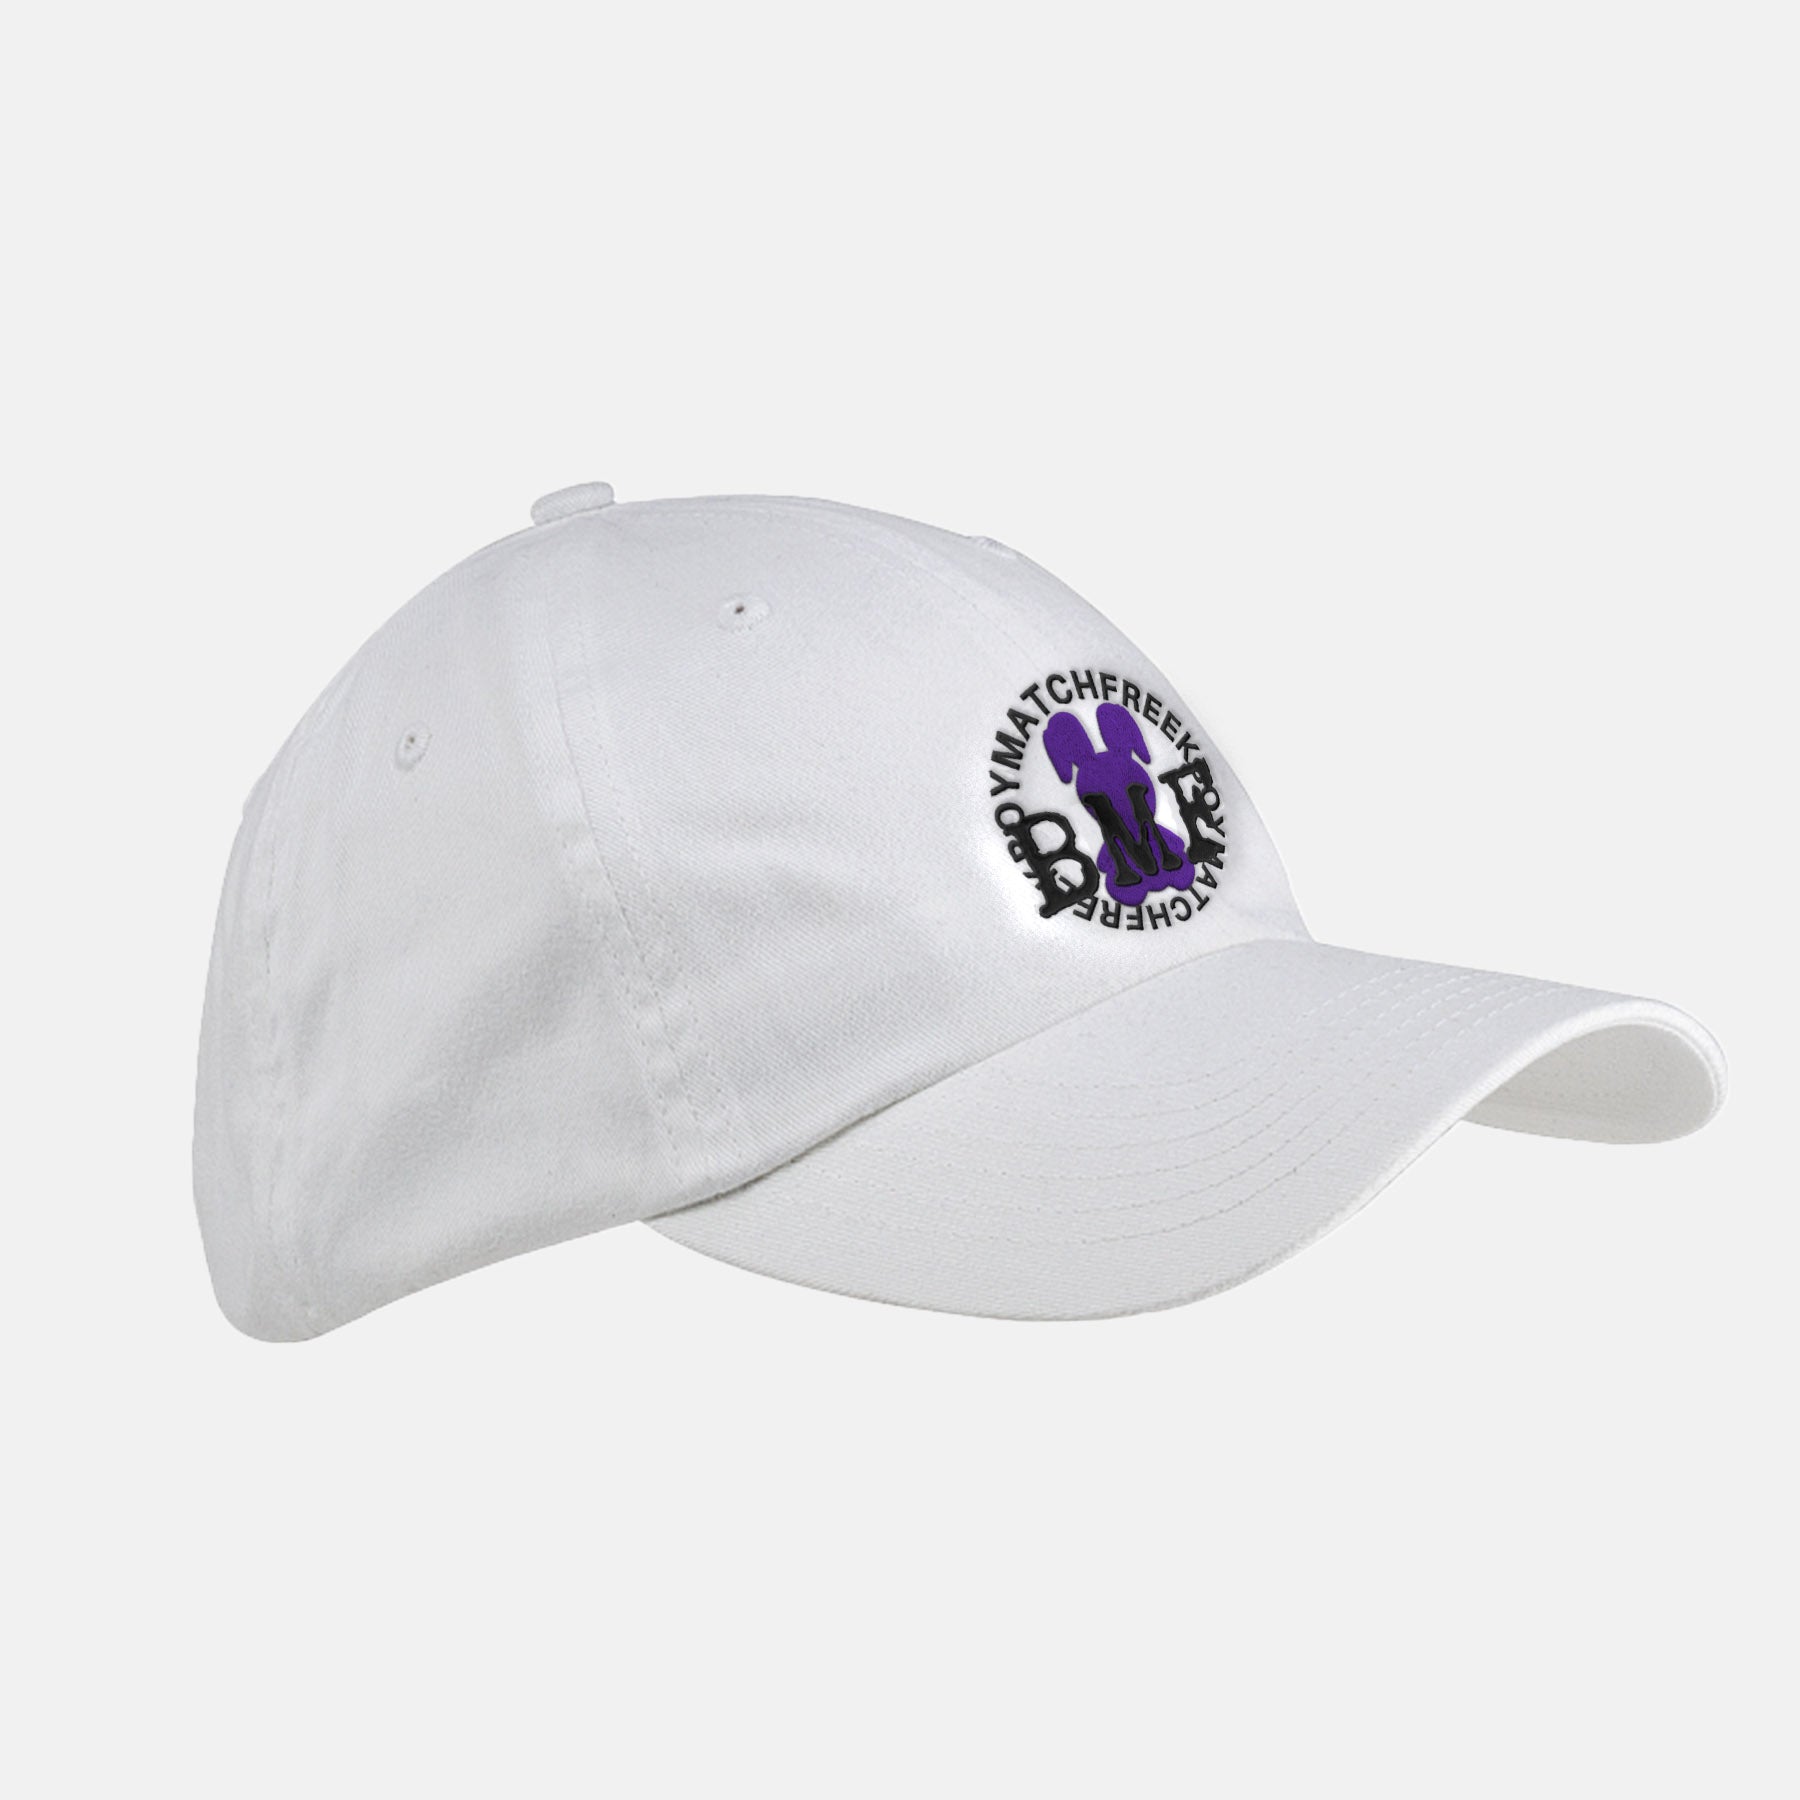 jordan 3 dark iris matching cap hat purple embroidery white